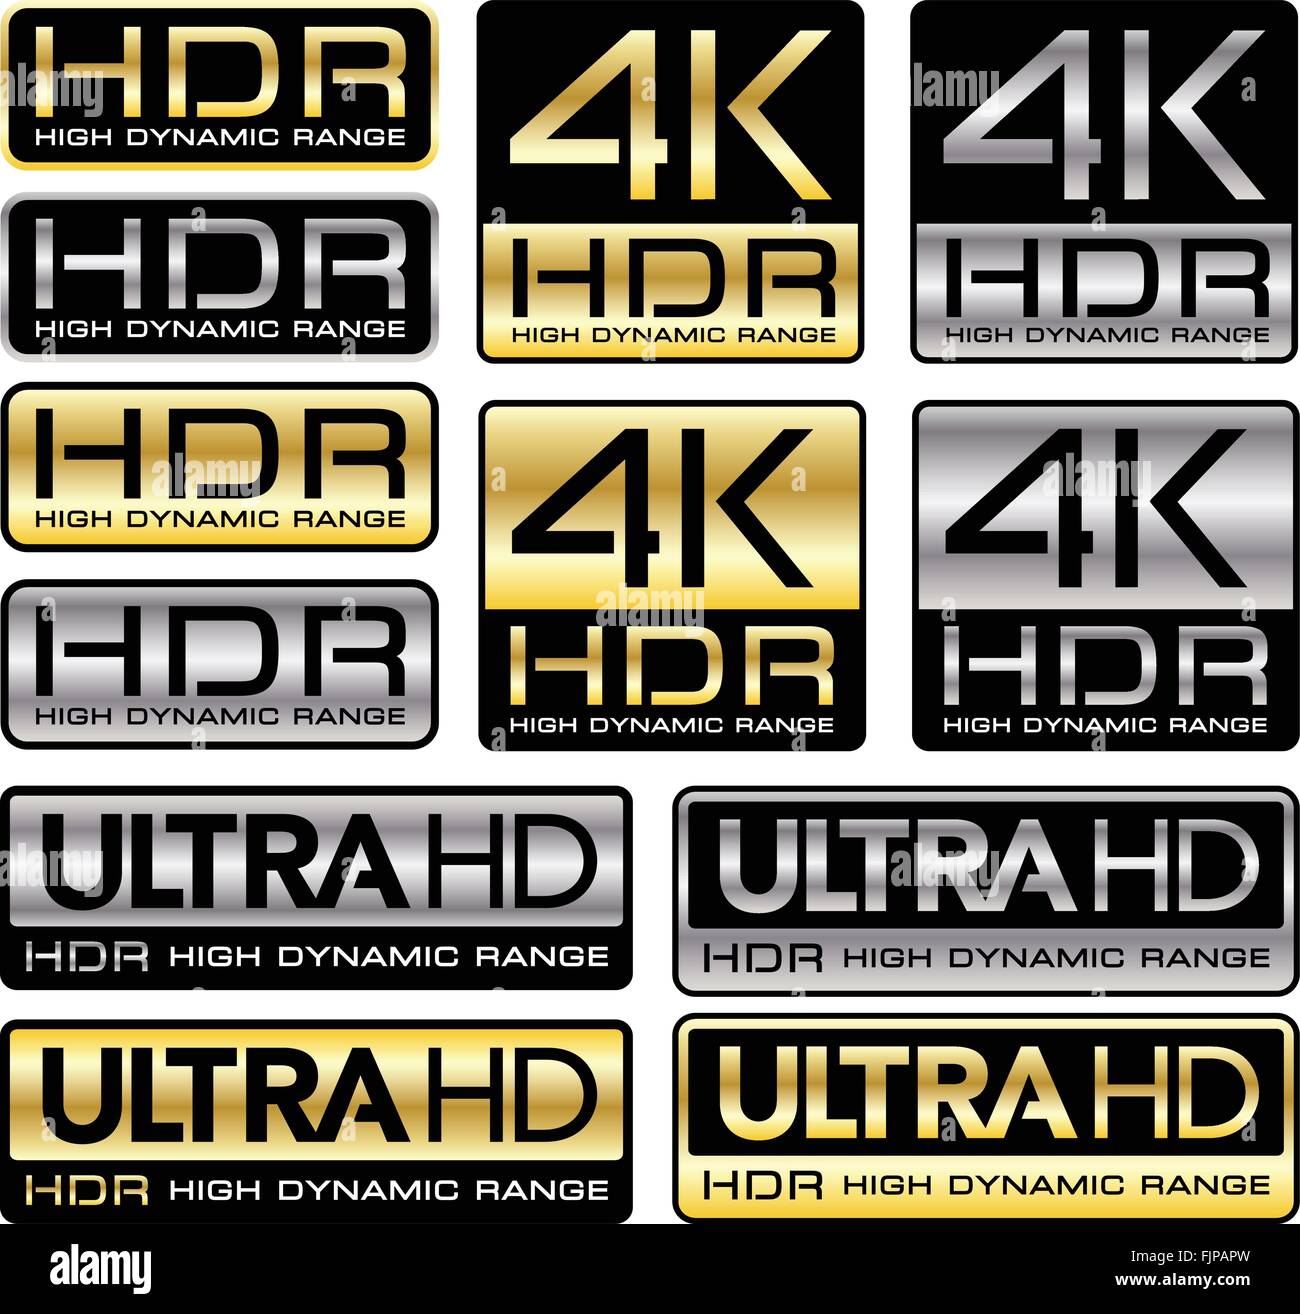 4K Ultra HD HDR Logo